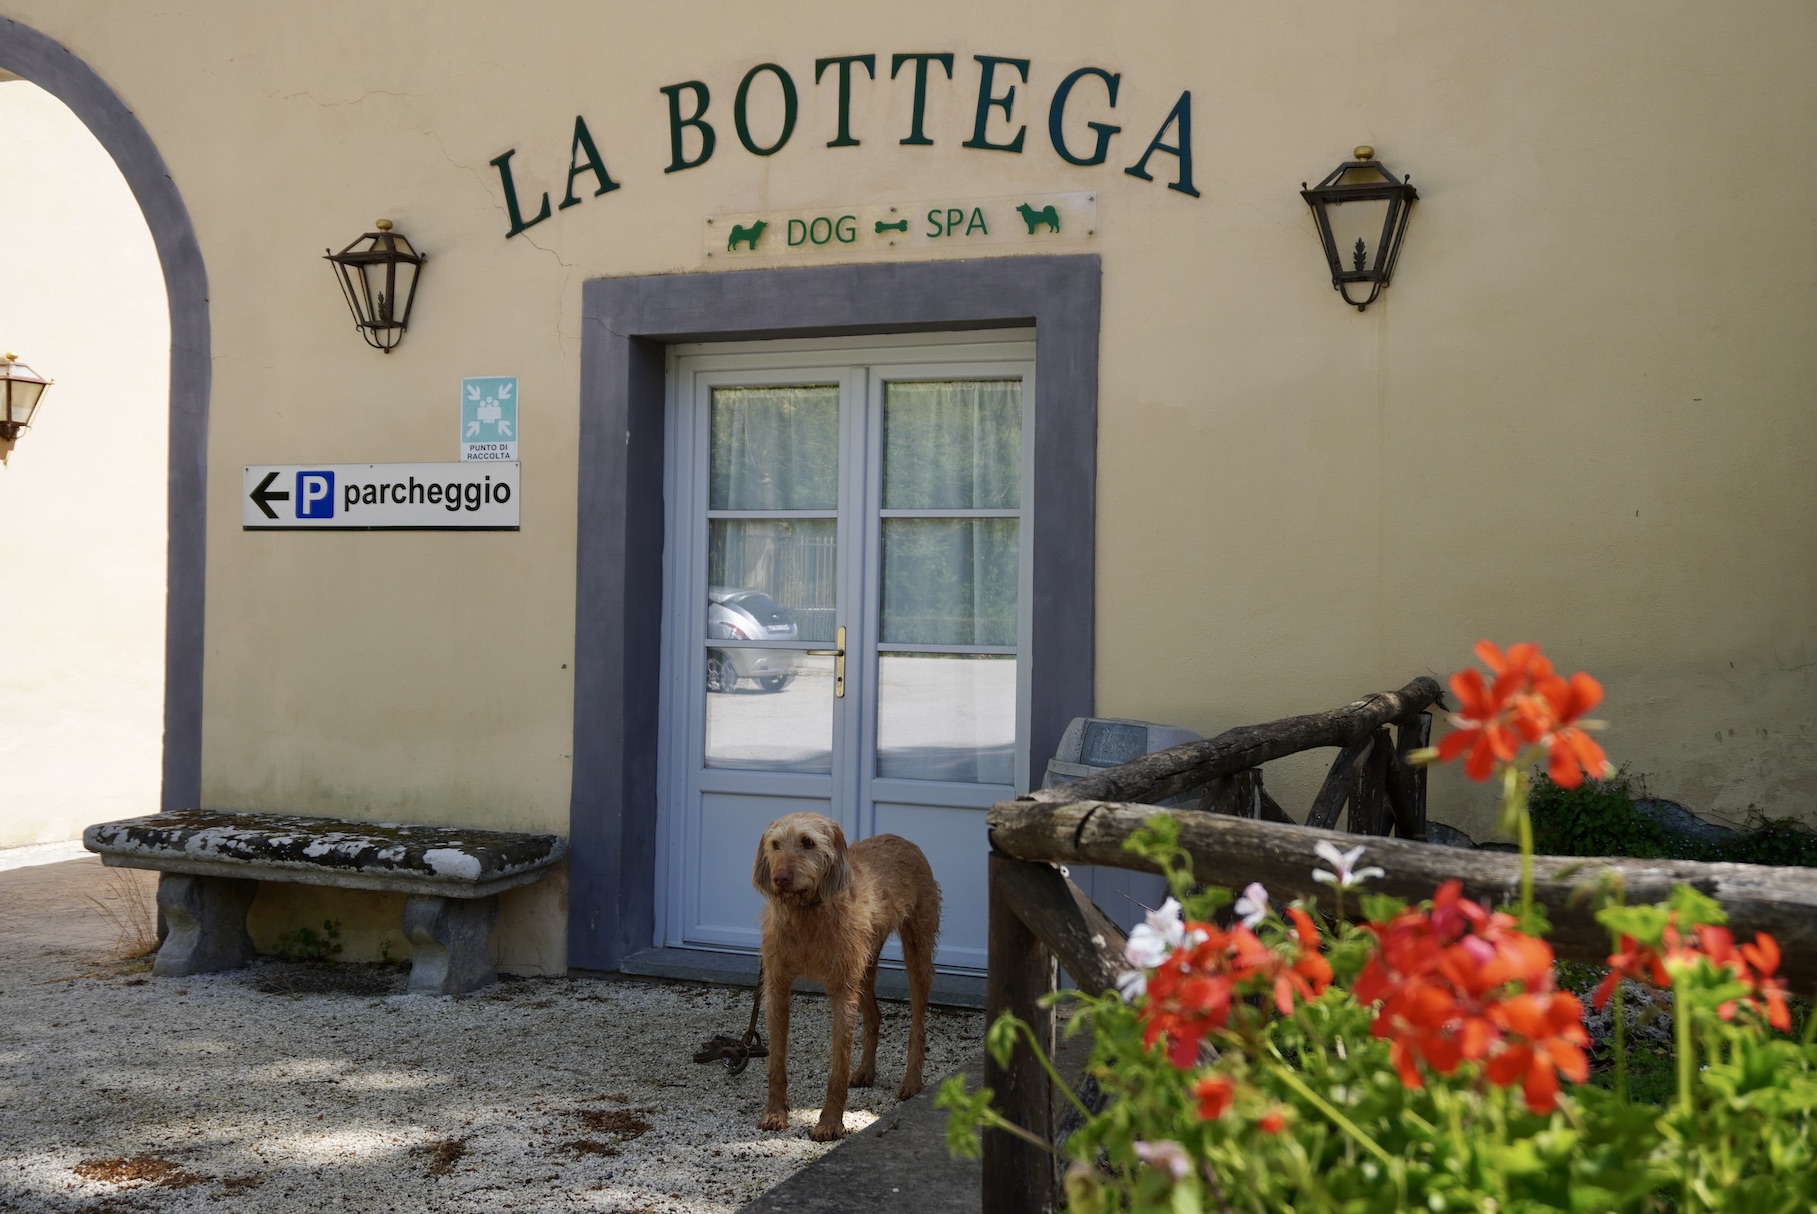 Dog-Spa Italien, tierisch-in-fahrt.de